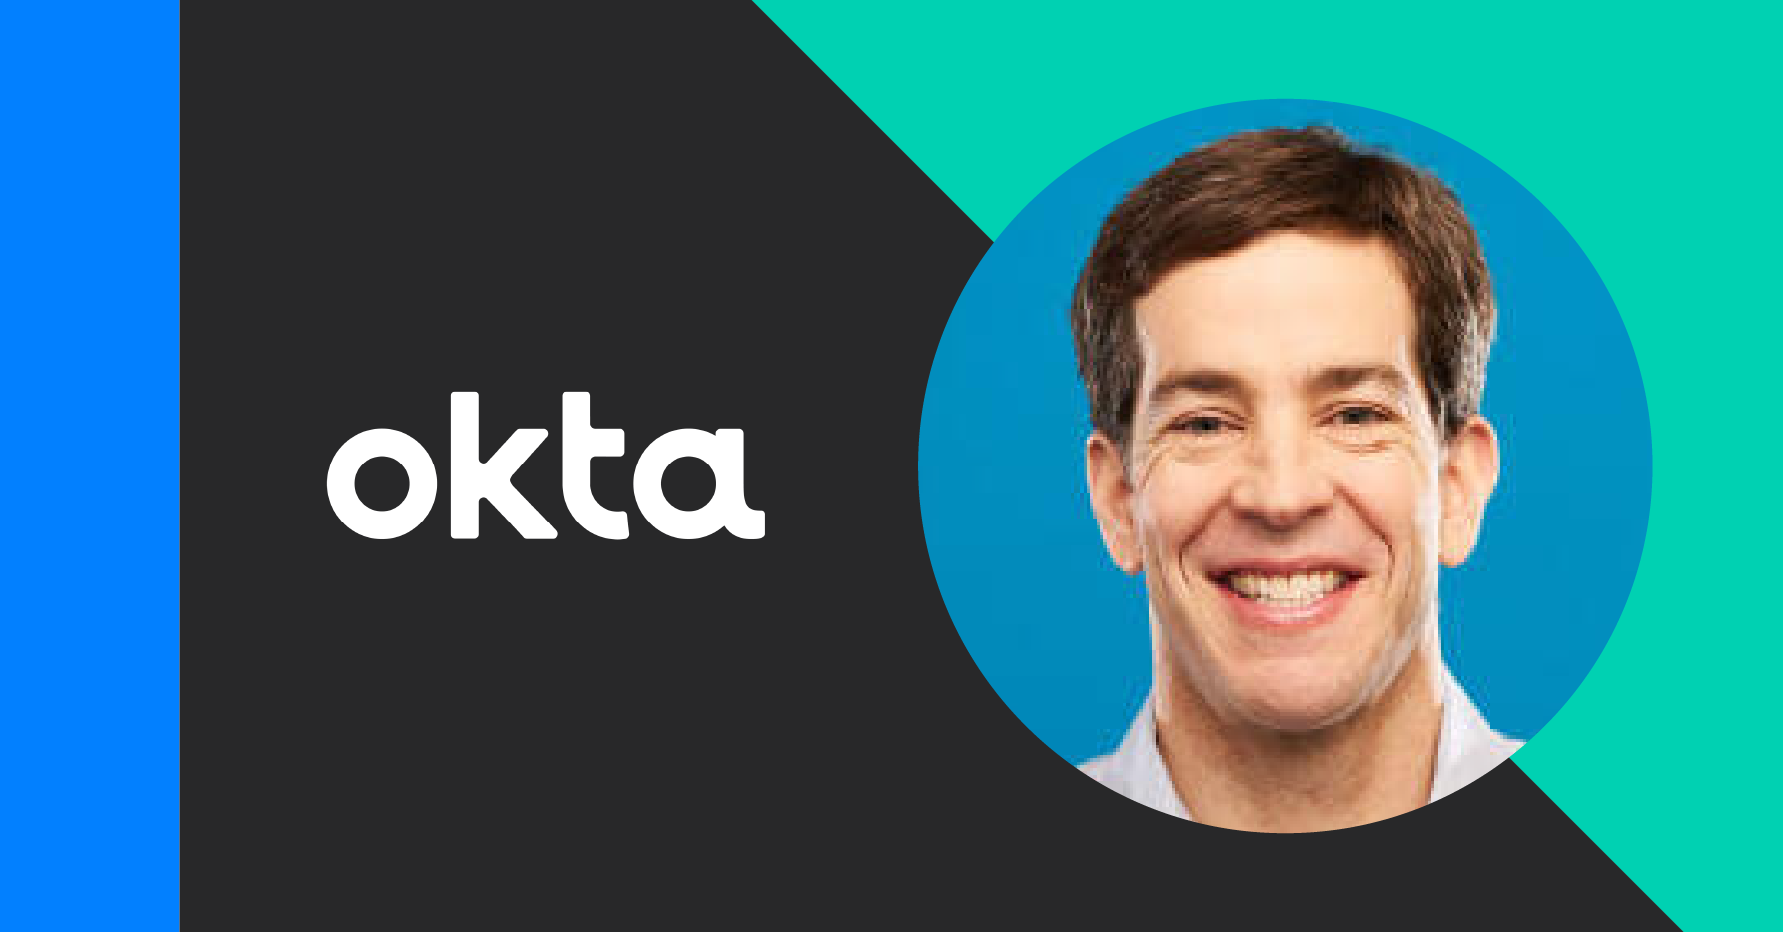 Banner image with Okta logo and headshot photograph of Todd McKinnon, CEO of Clari